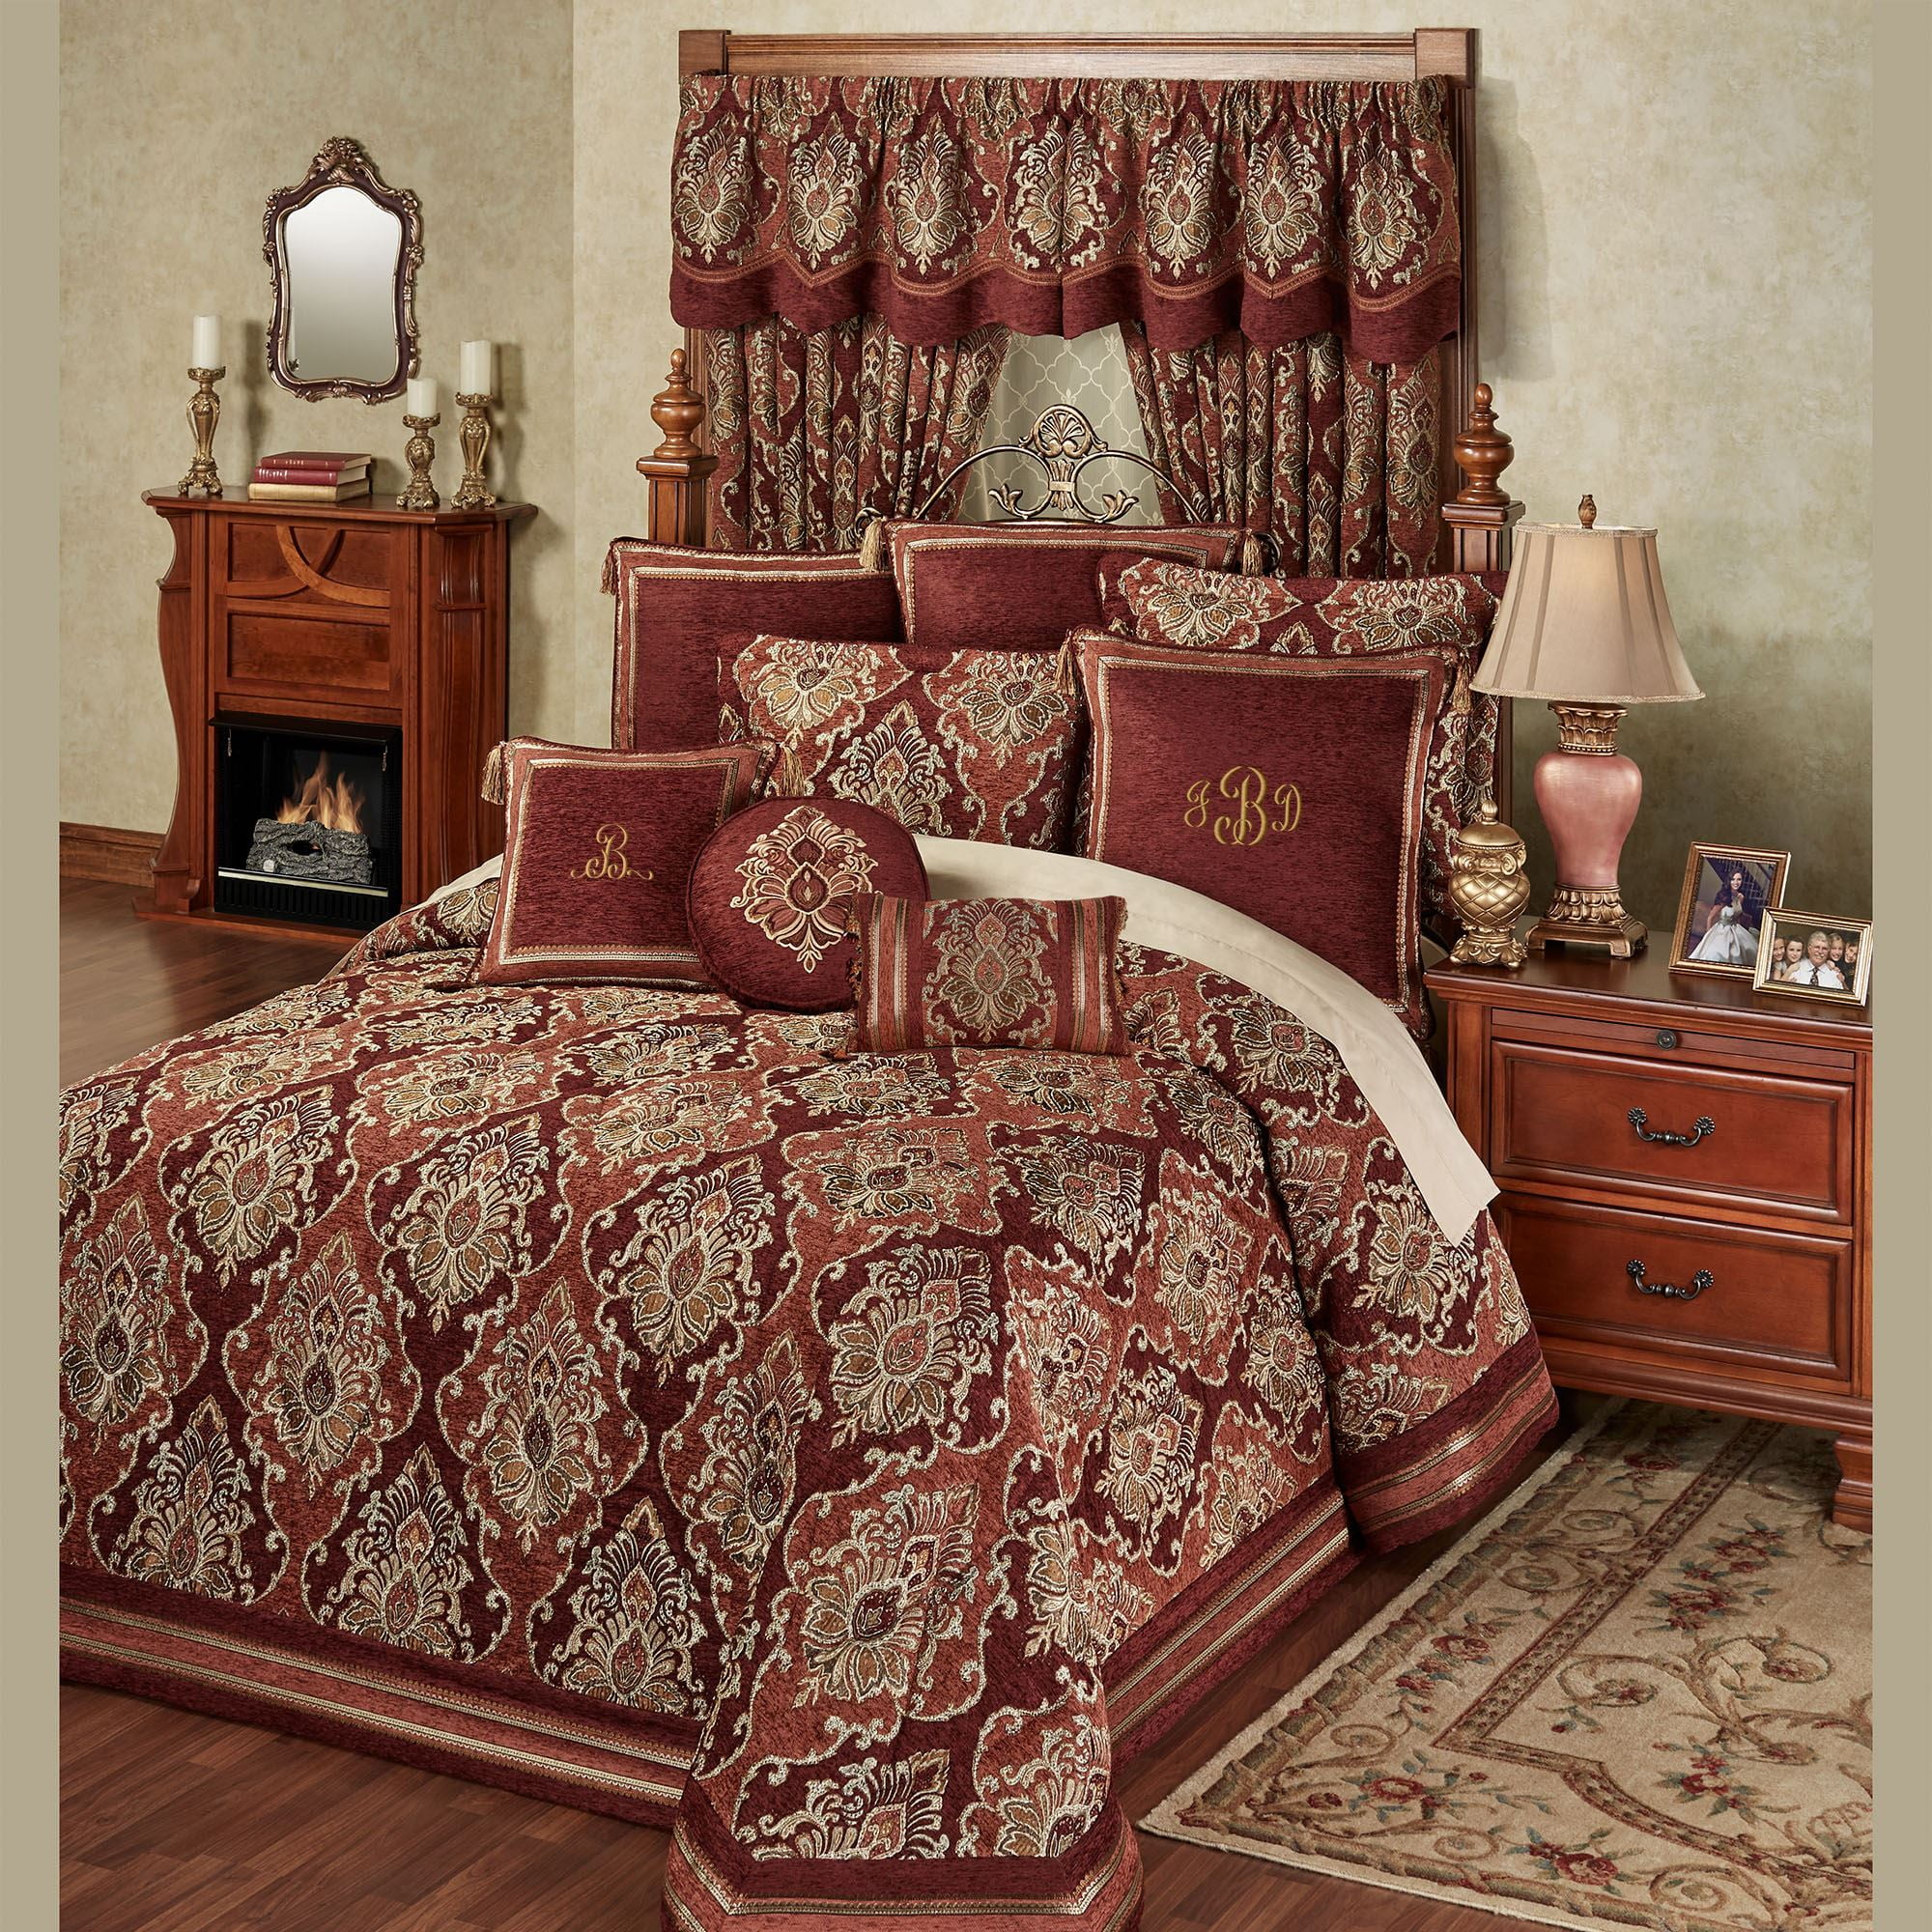 Royal - Color Grande for Decor Bedspread Elegant Victorian Grande Jacquard Bedding - Ravenna Style Quilted Bedspread Queen - Chenille - Burgundy Aesthetic